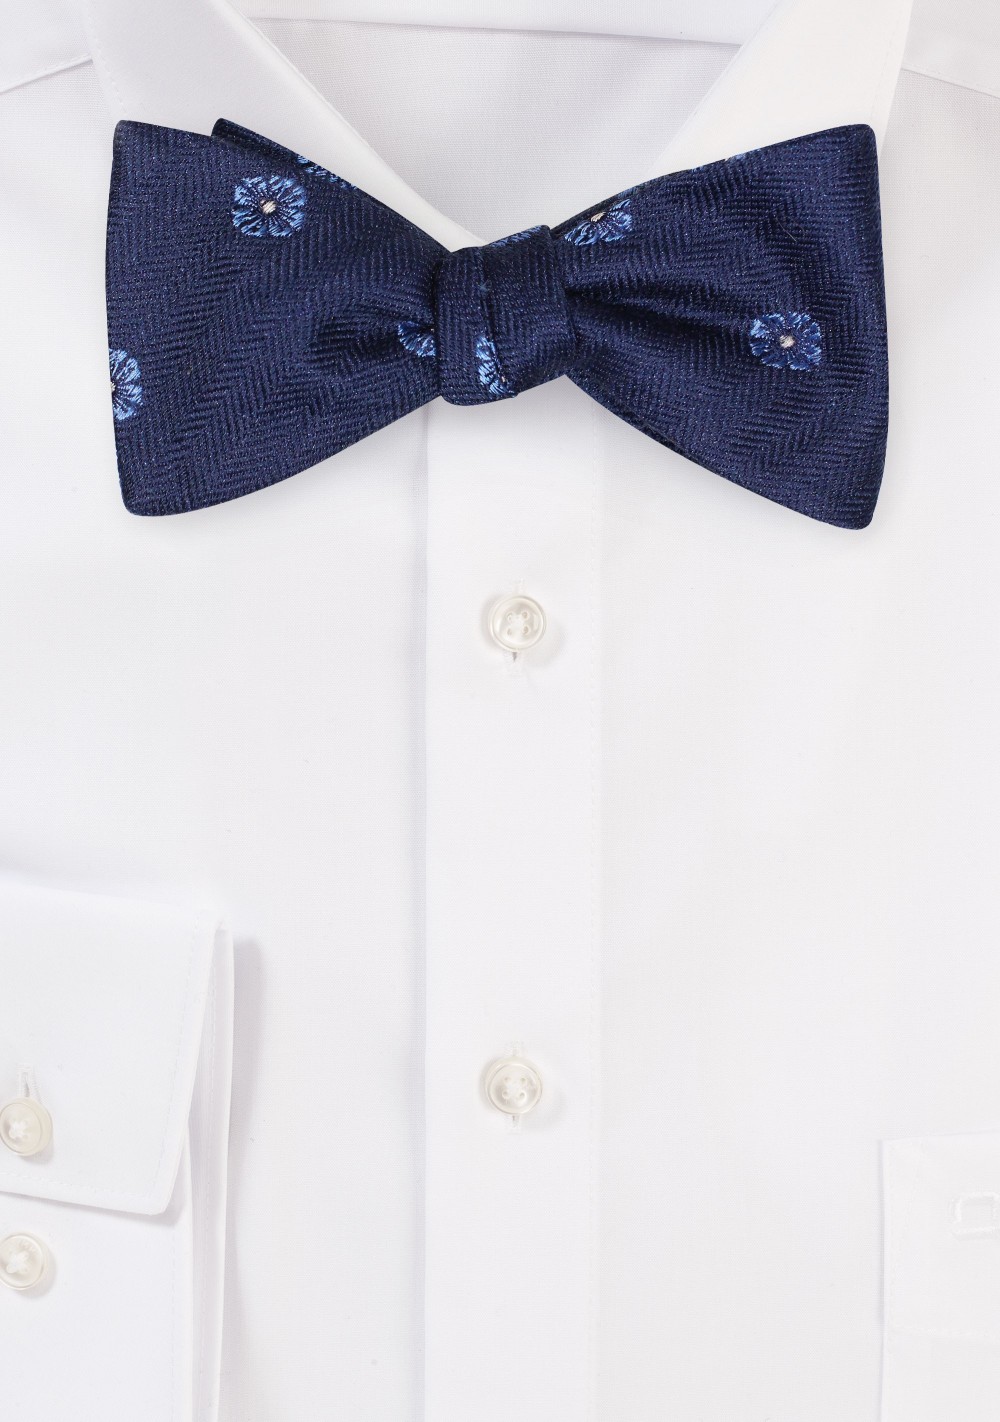 Navy Floral Bowtie in Self-Tie Style